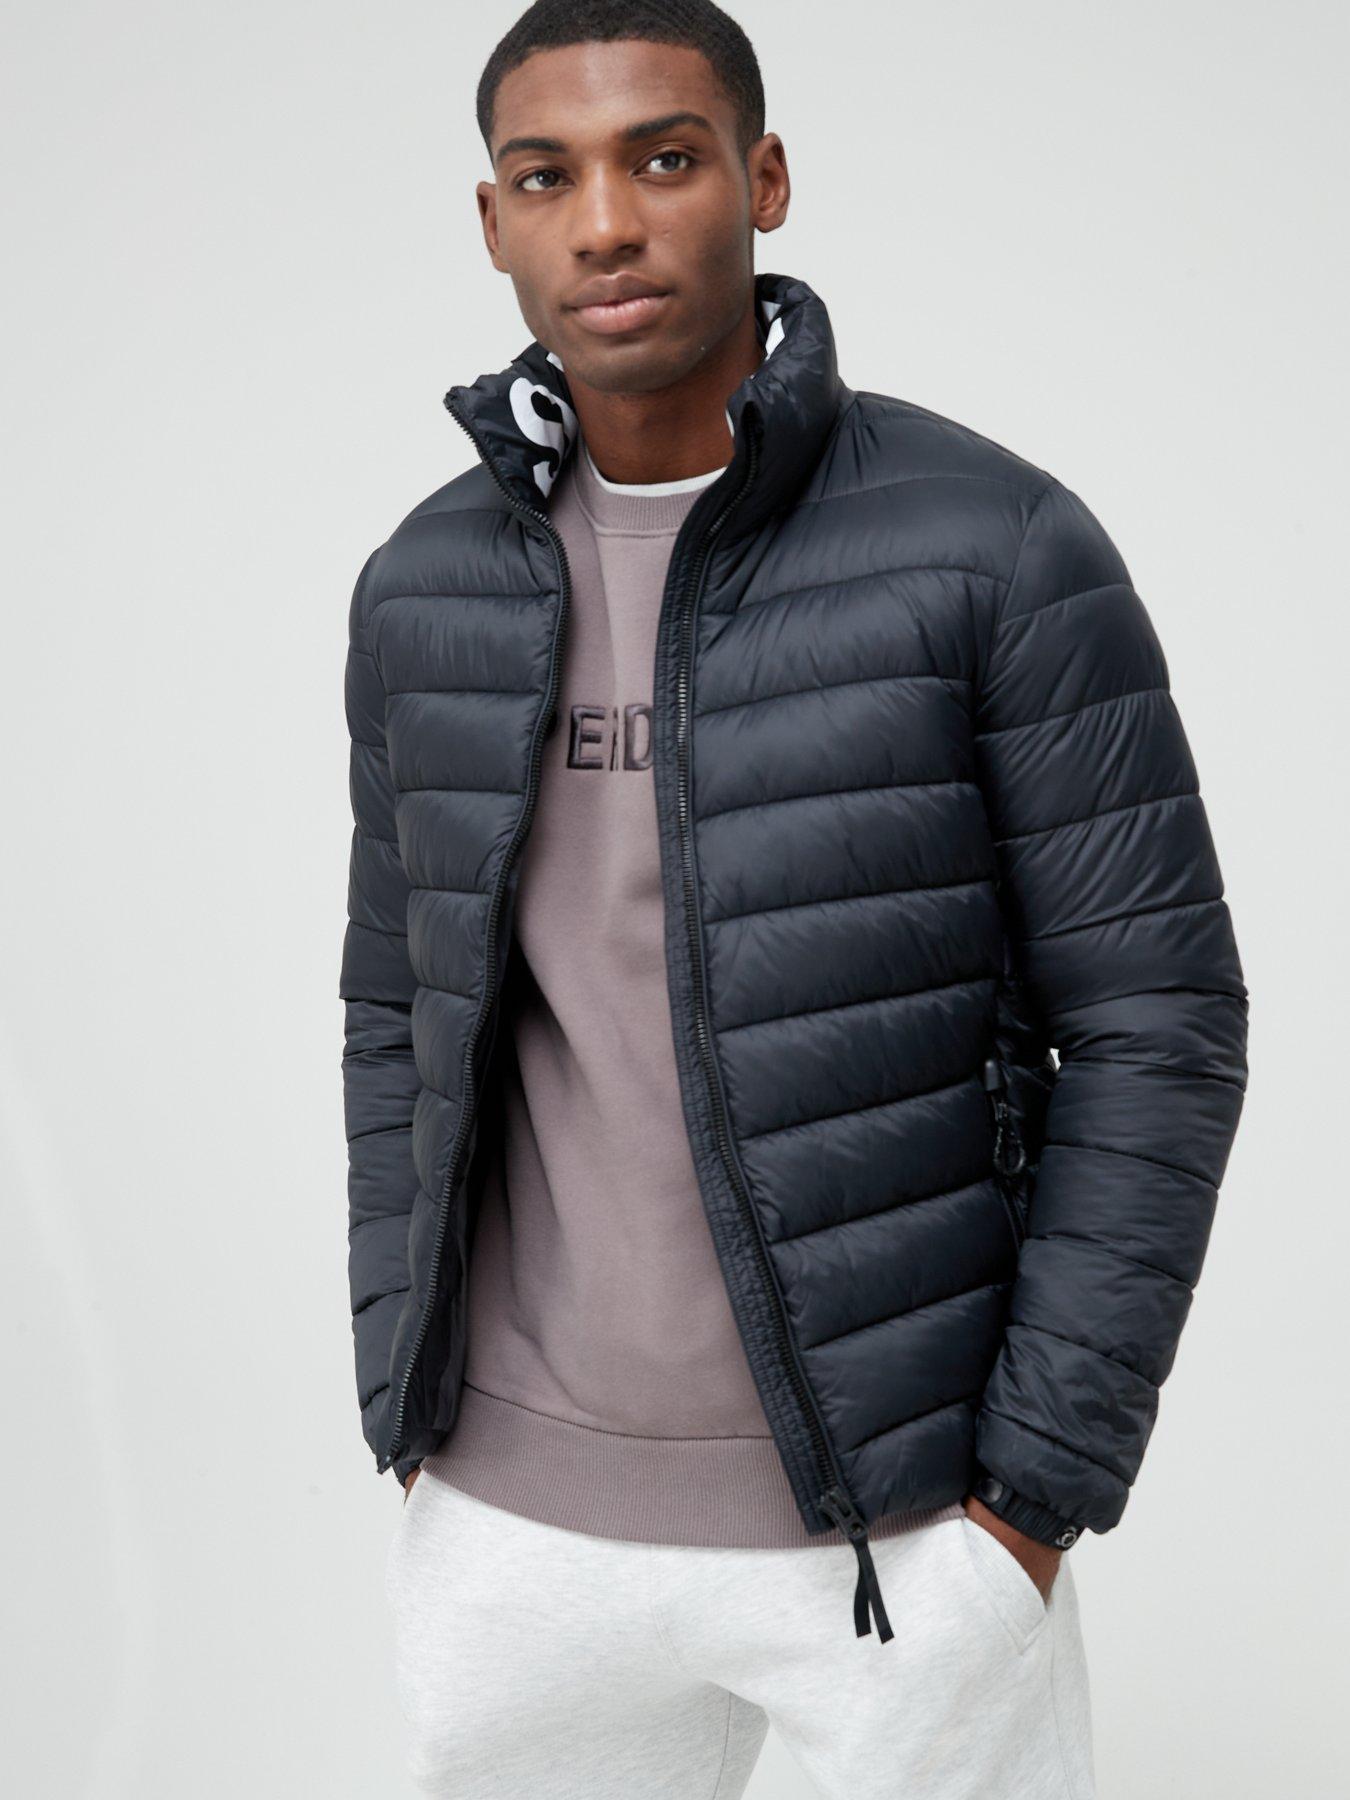 discount 69% Black/Gray XXL WOMEN FASHION Jackets Jacket Sports Reebok jacket 